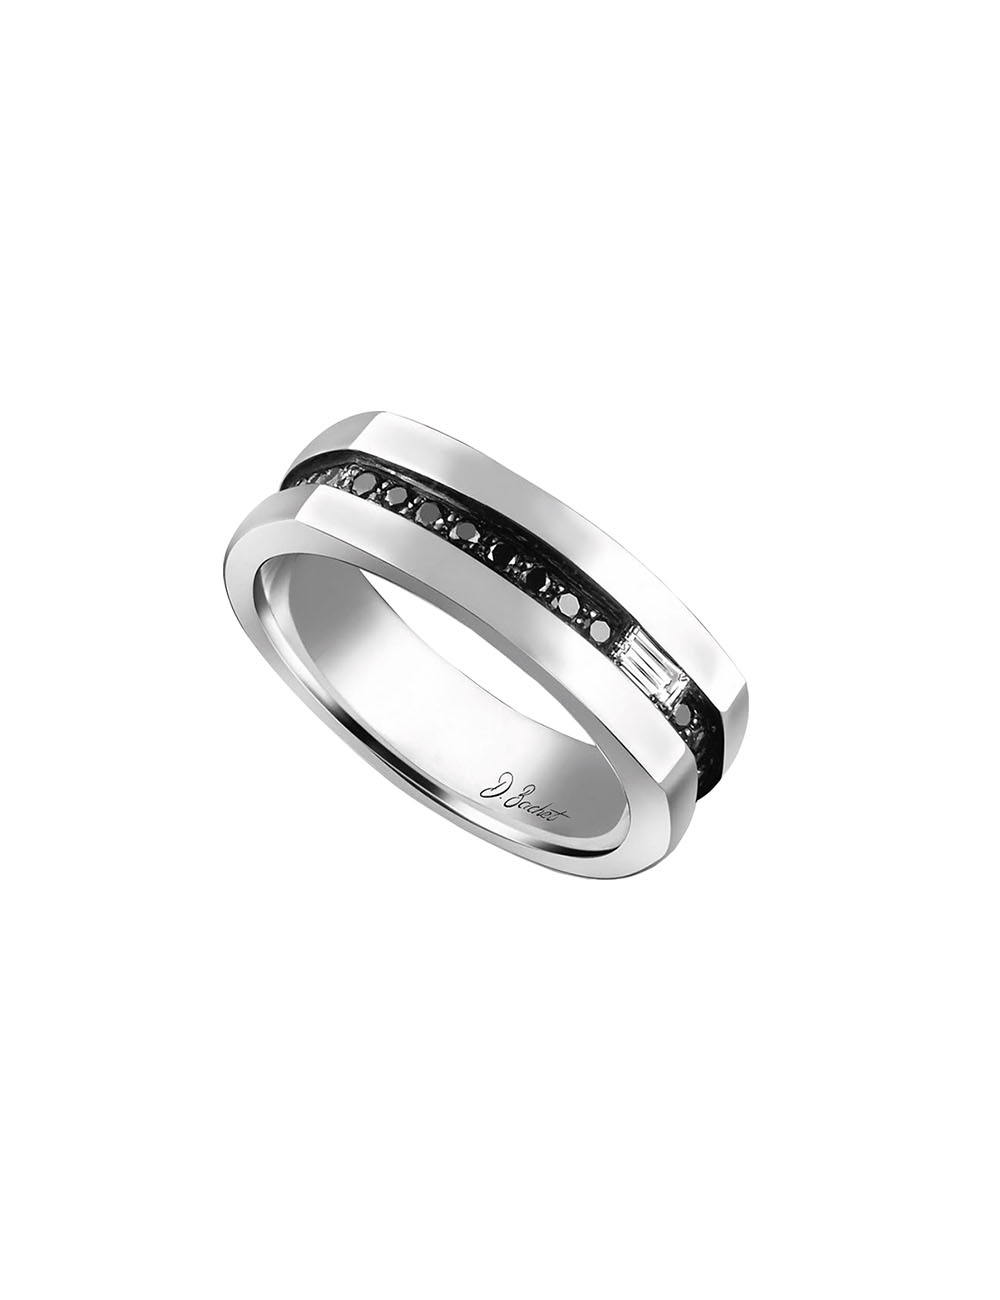 Luxury men's ring in platinum, black diamonds and a baguette-cut white diamond